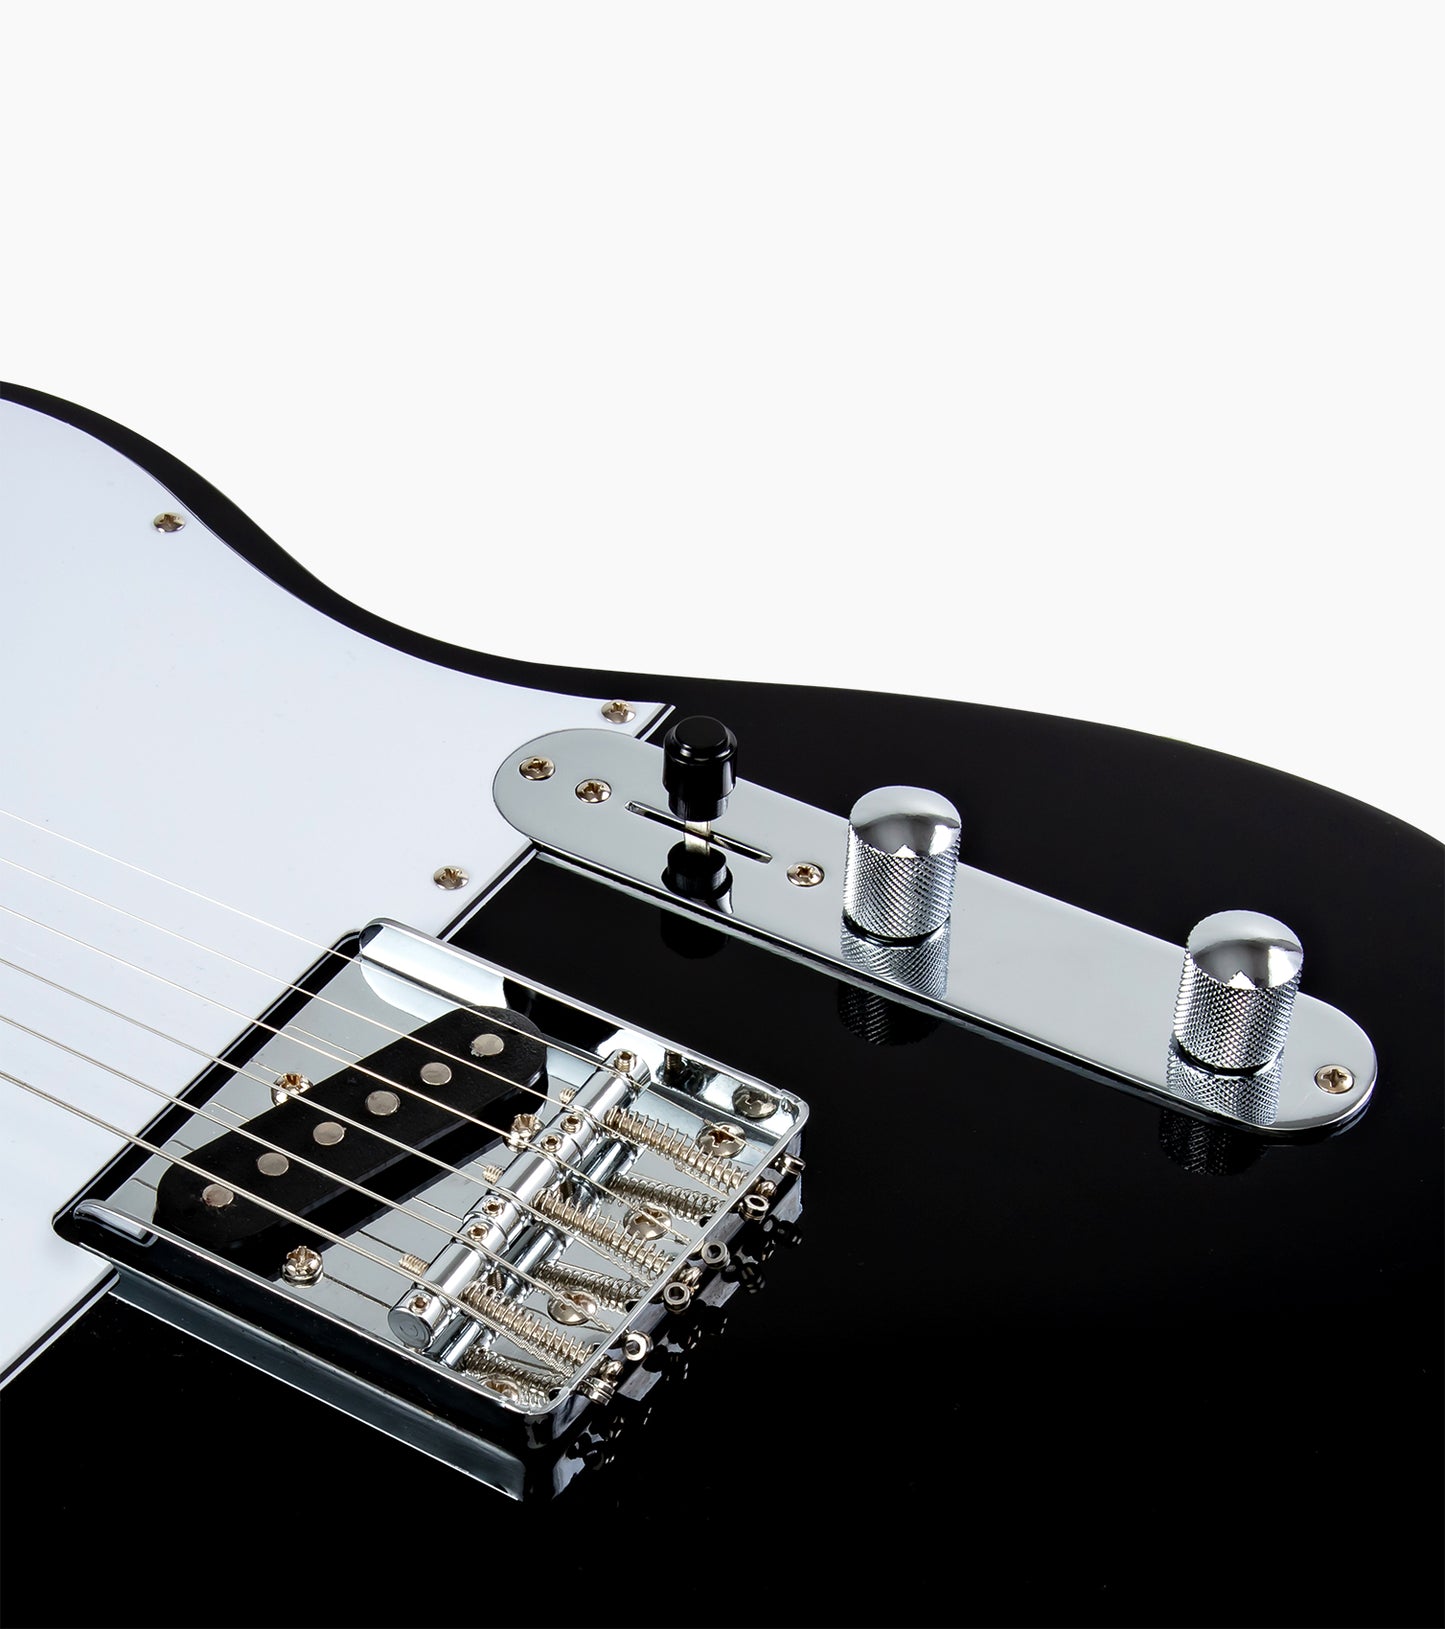 close-up of black single-cutaway electric guitar knobs  